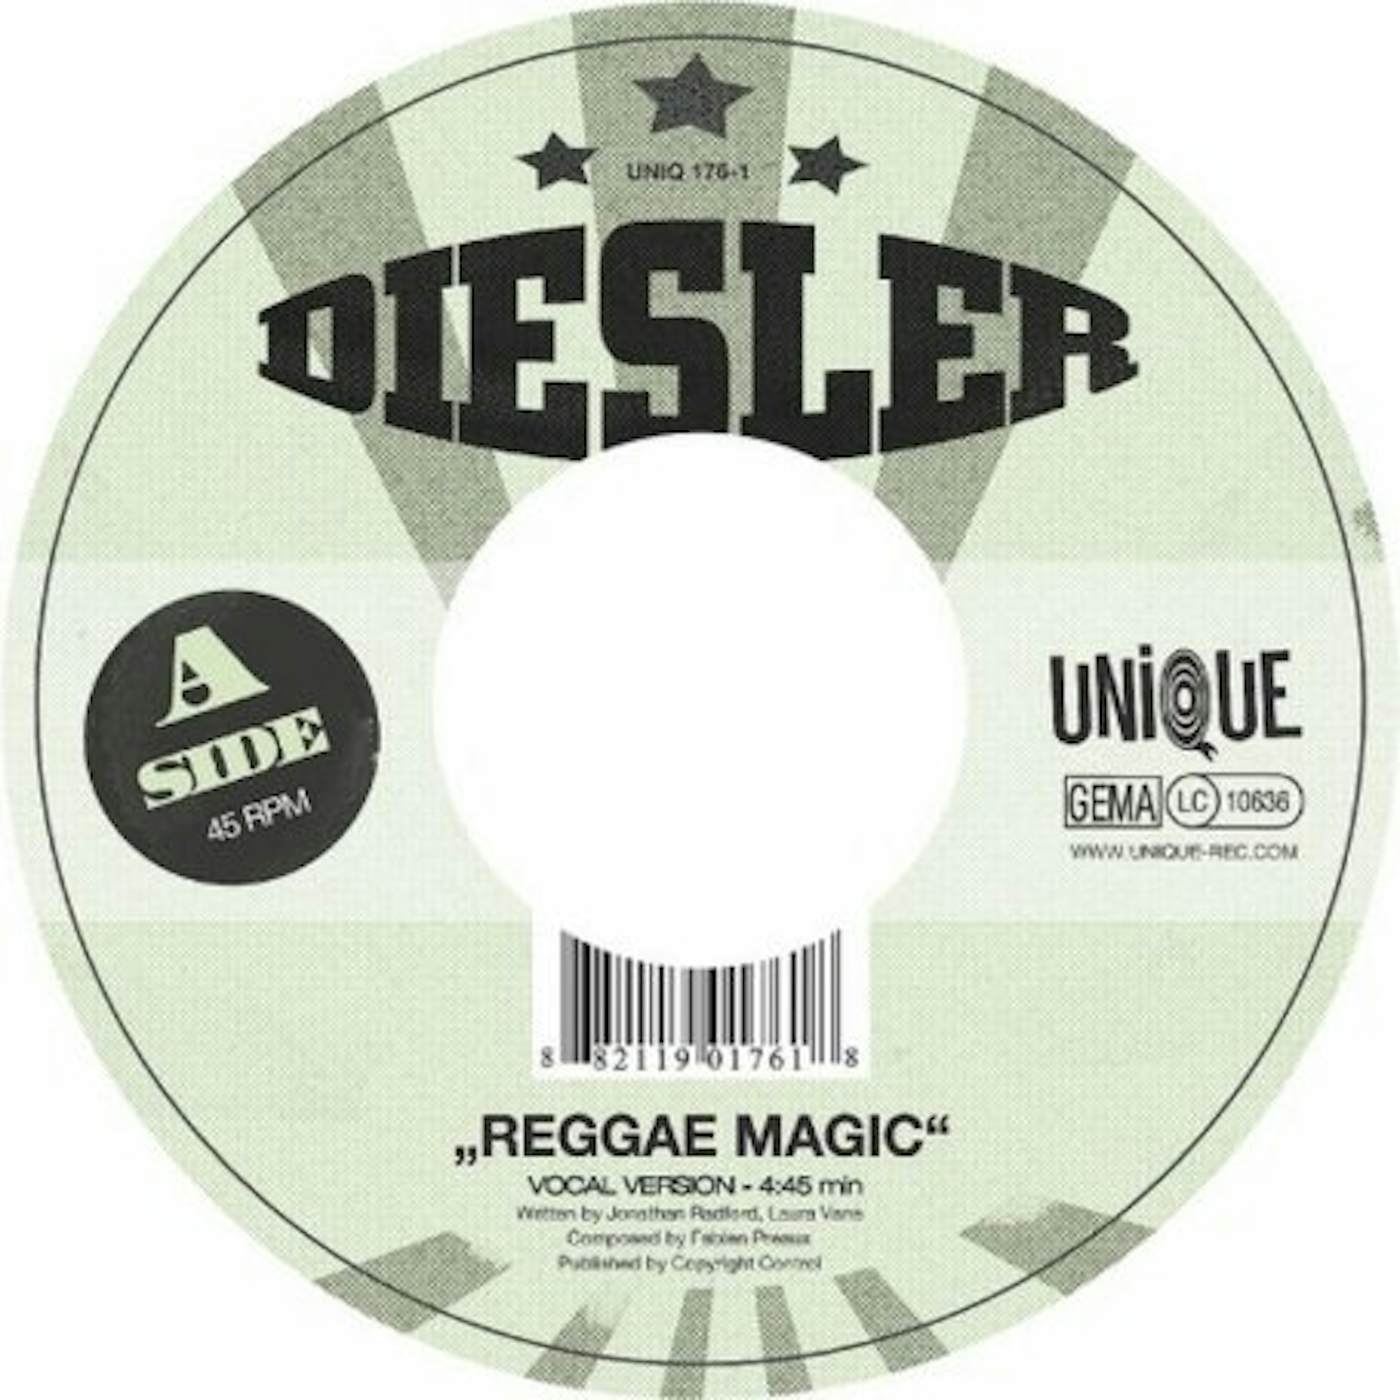 Diesler REGGAE MAGIC Vinyl Record - UK Release